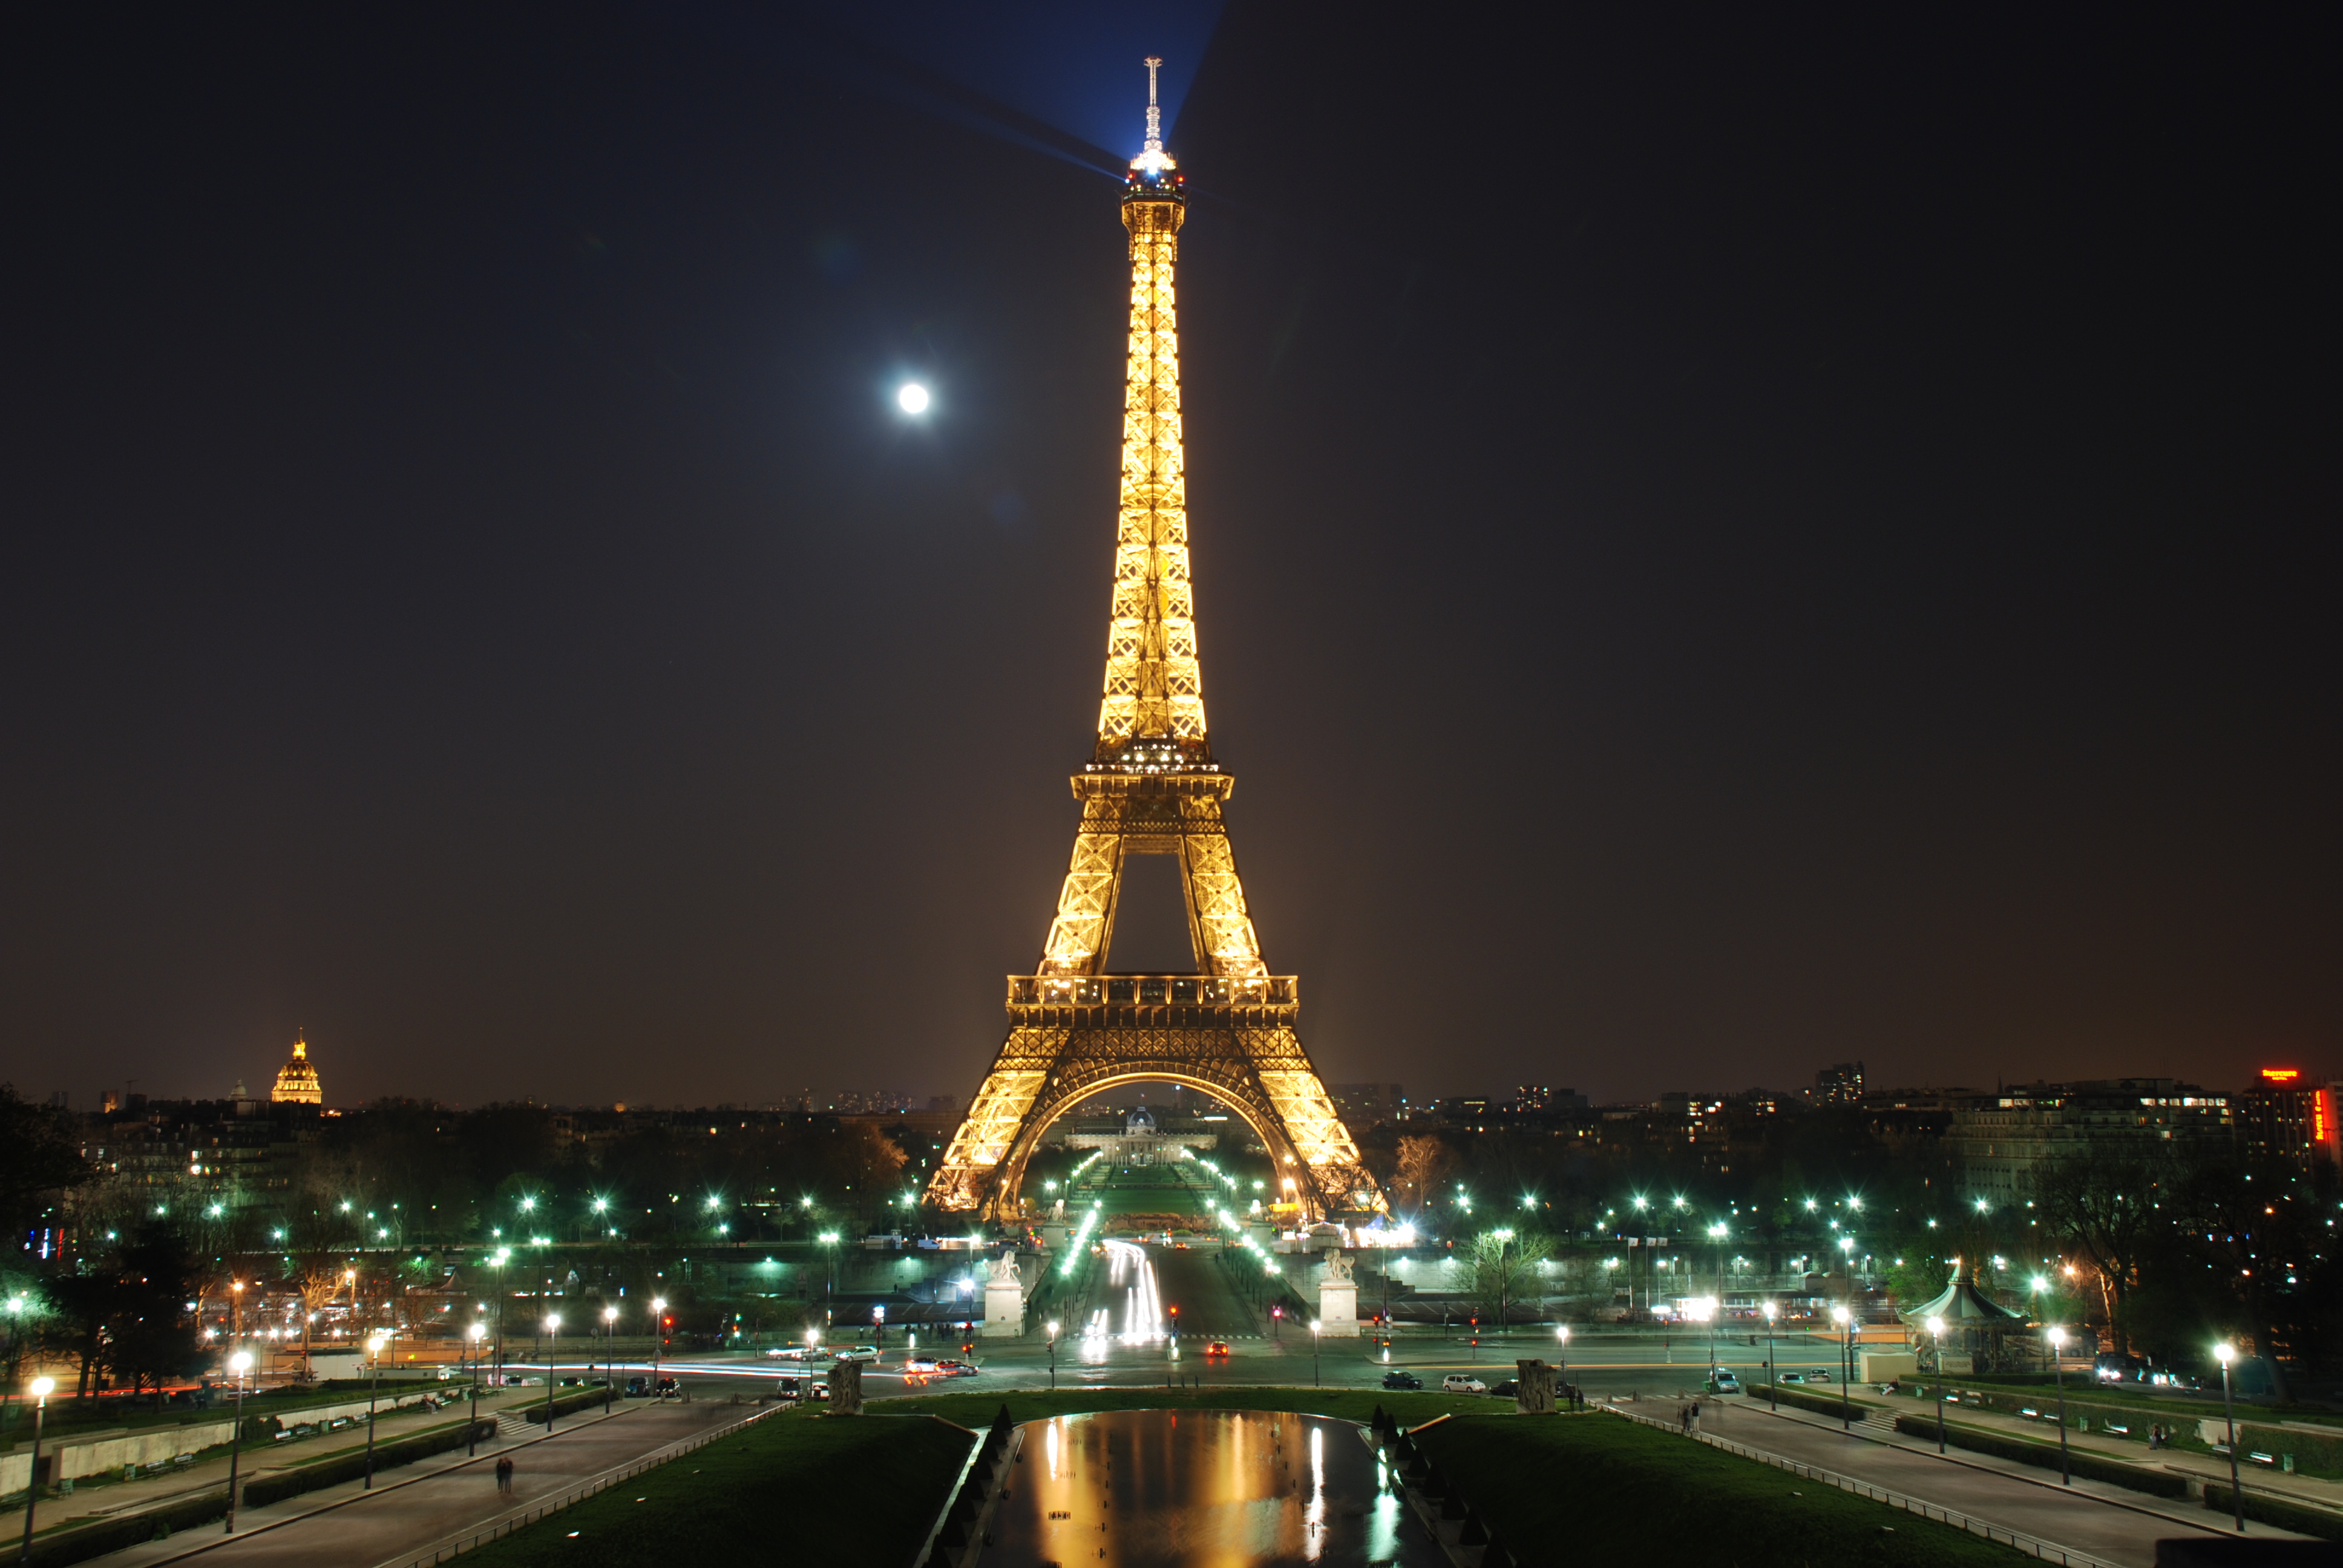 Eiffel Tower At Night Wallpaper - WallpaperSafari